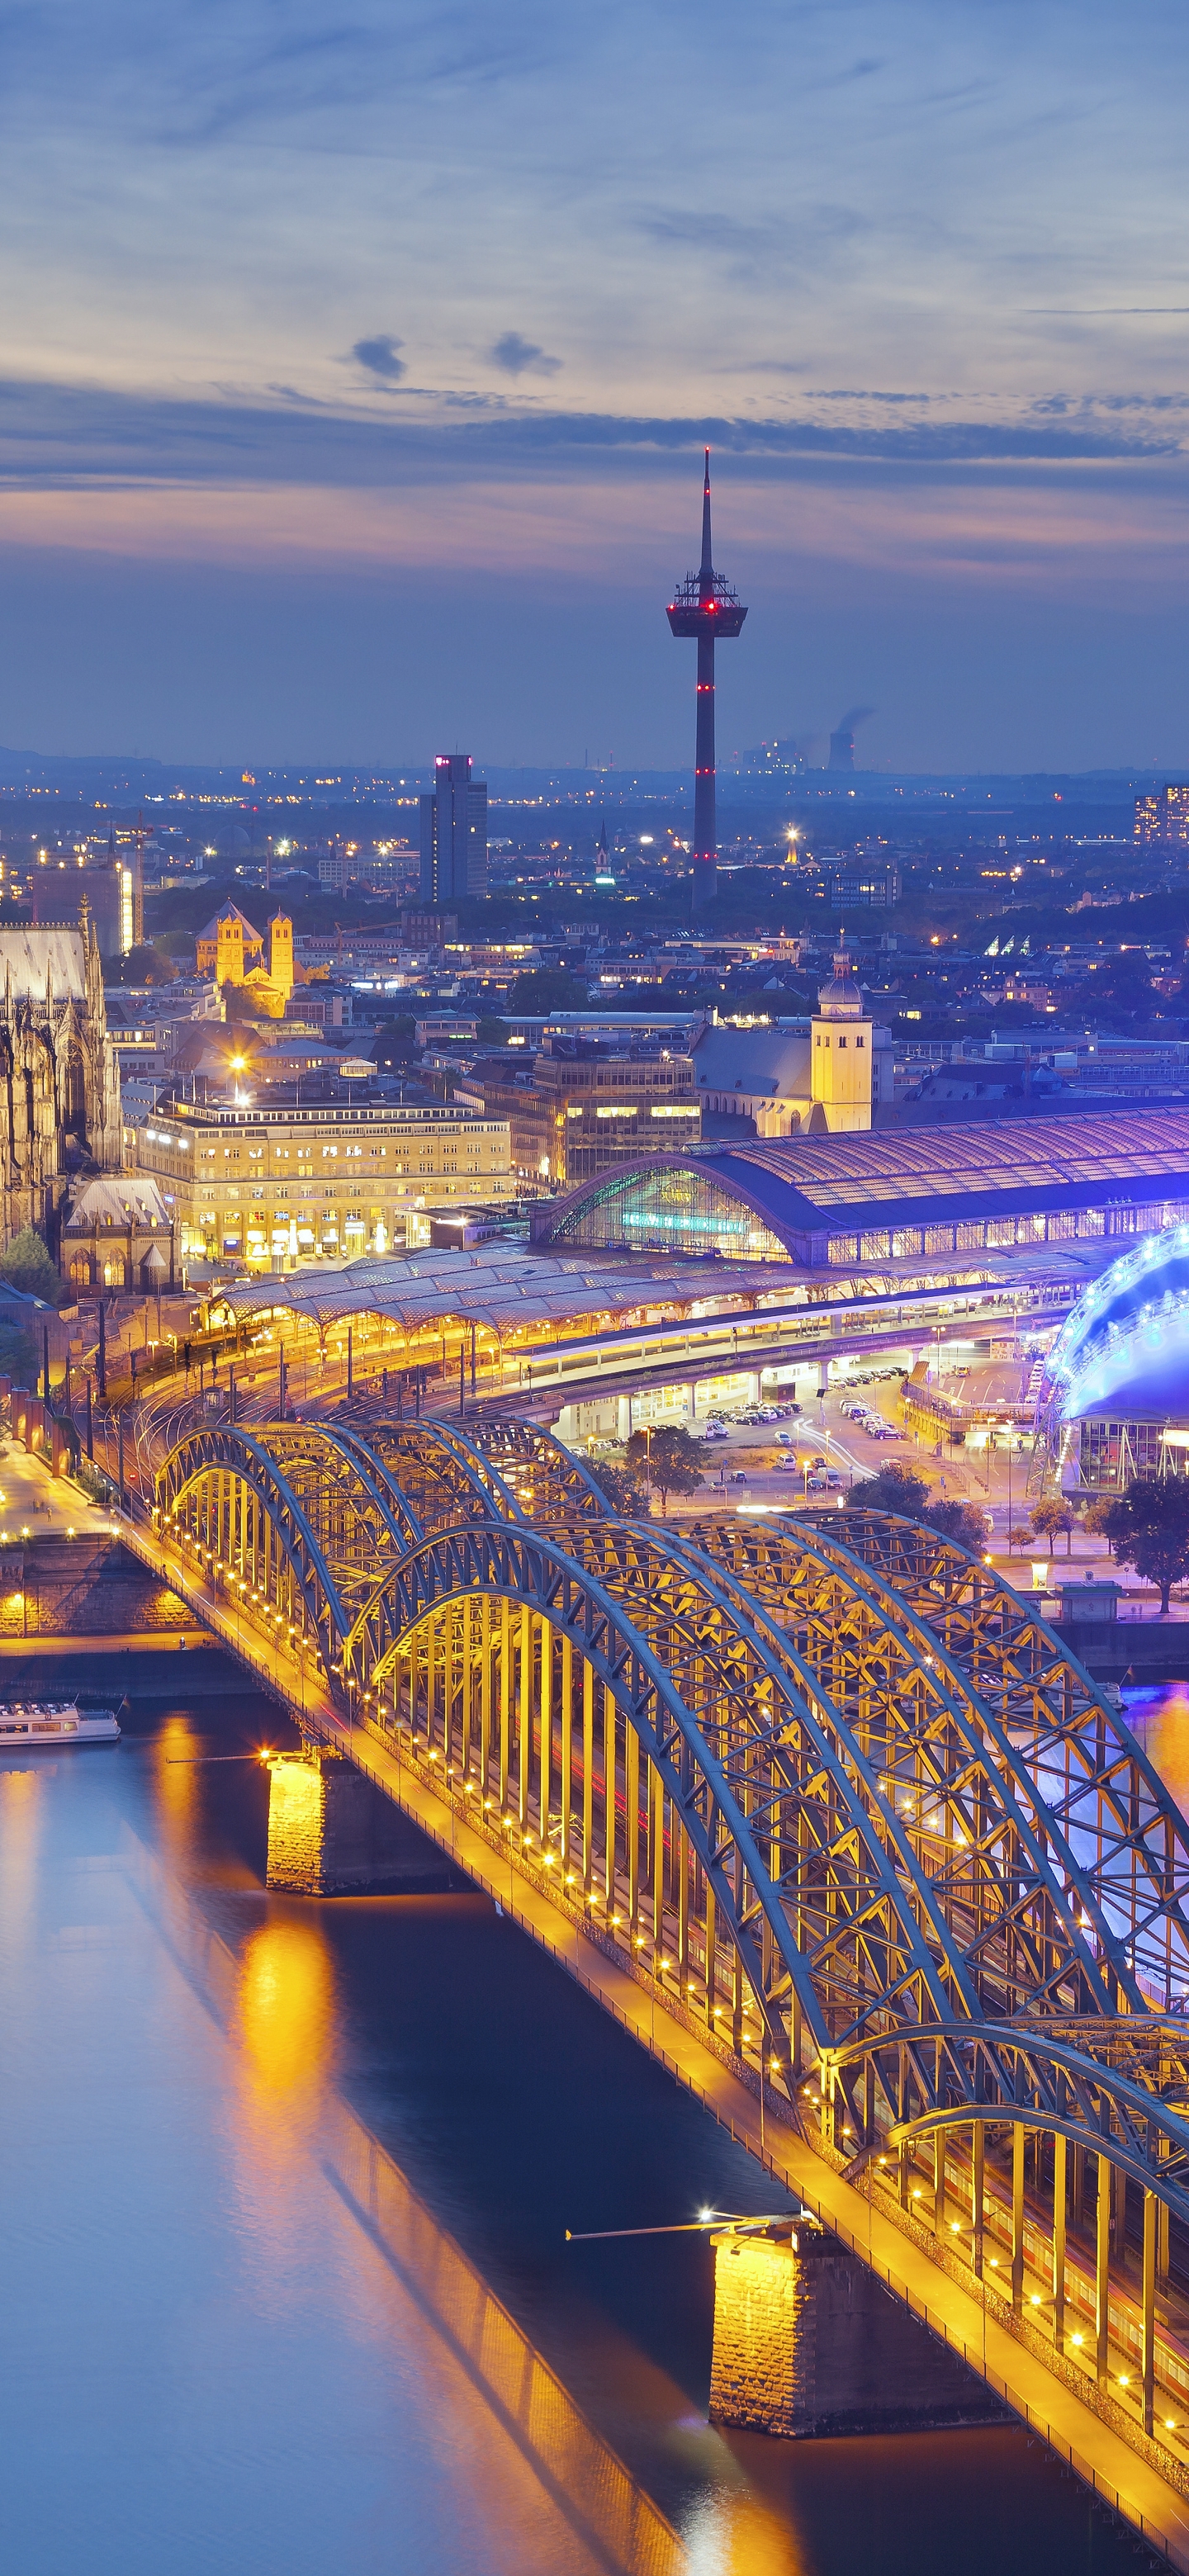 Image: City, evening, Cologne, Germany, river, bridge, view